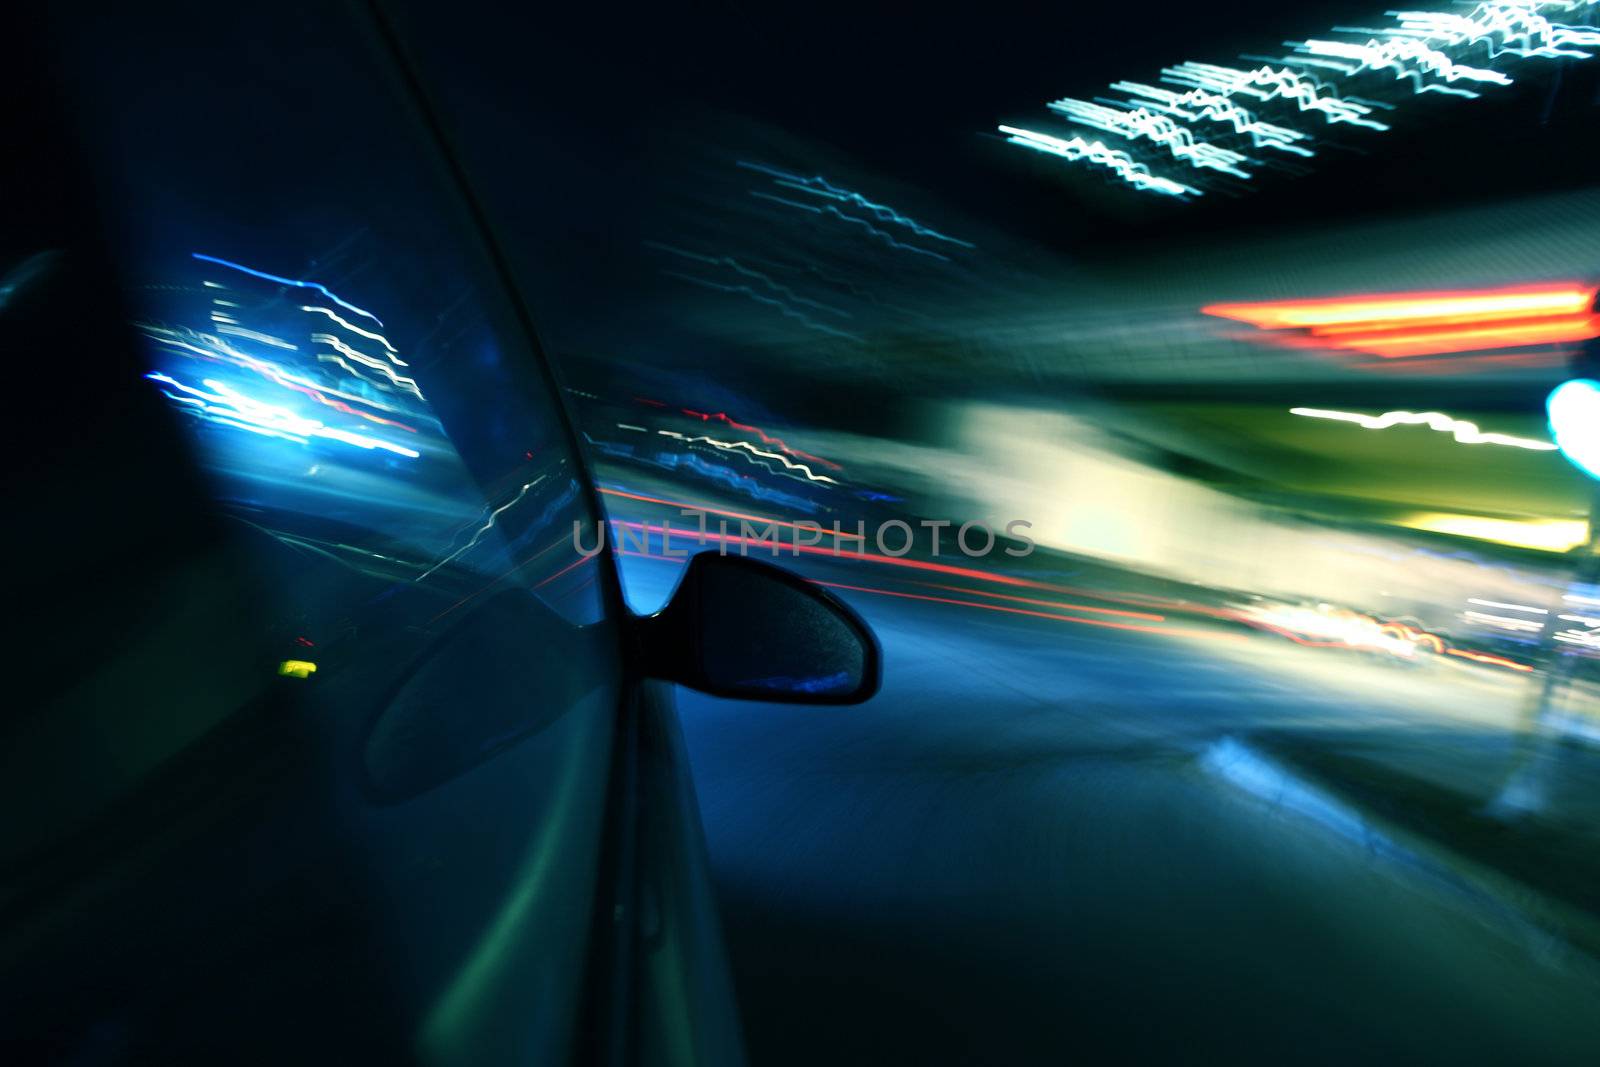 speed drive in night city